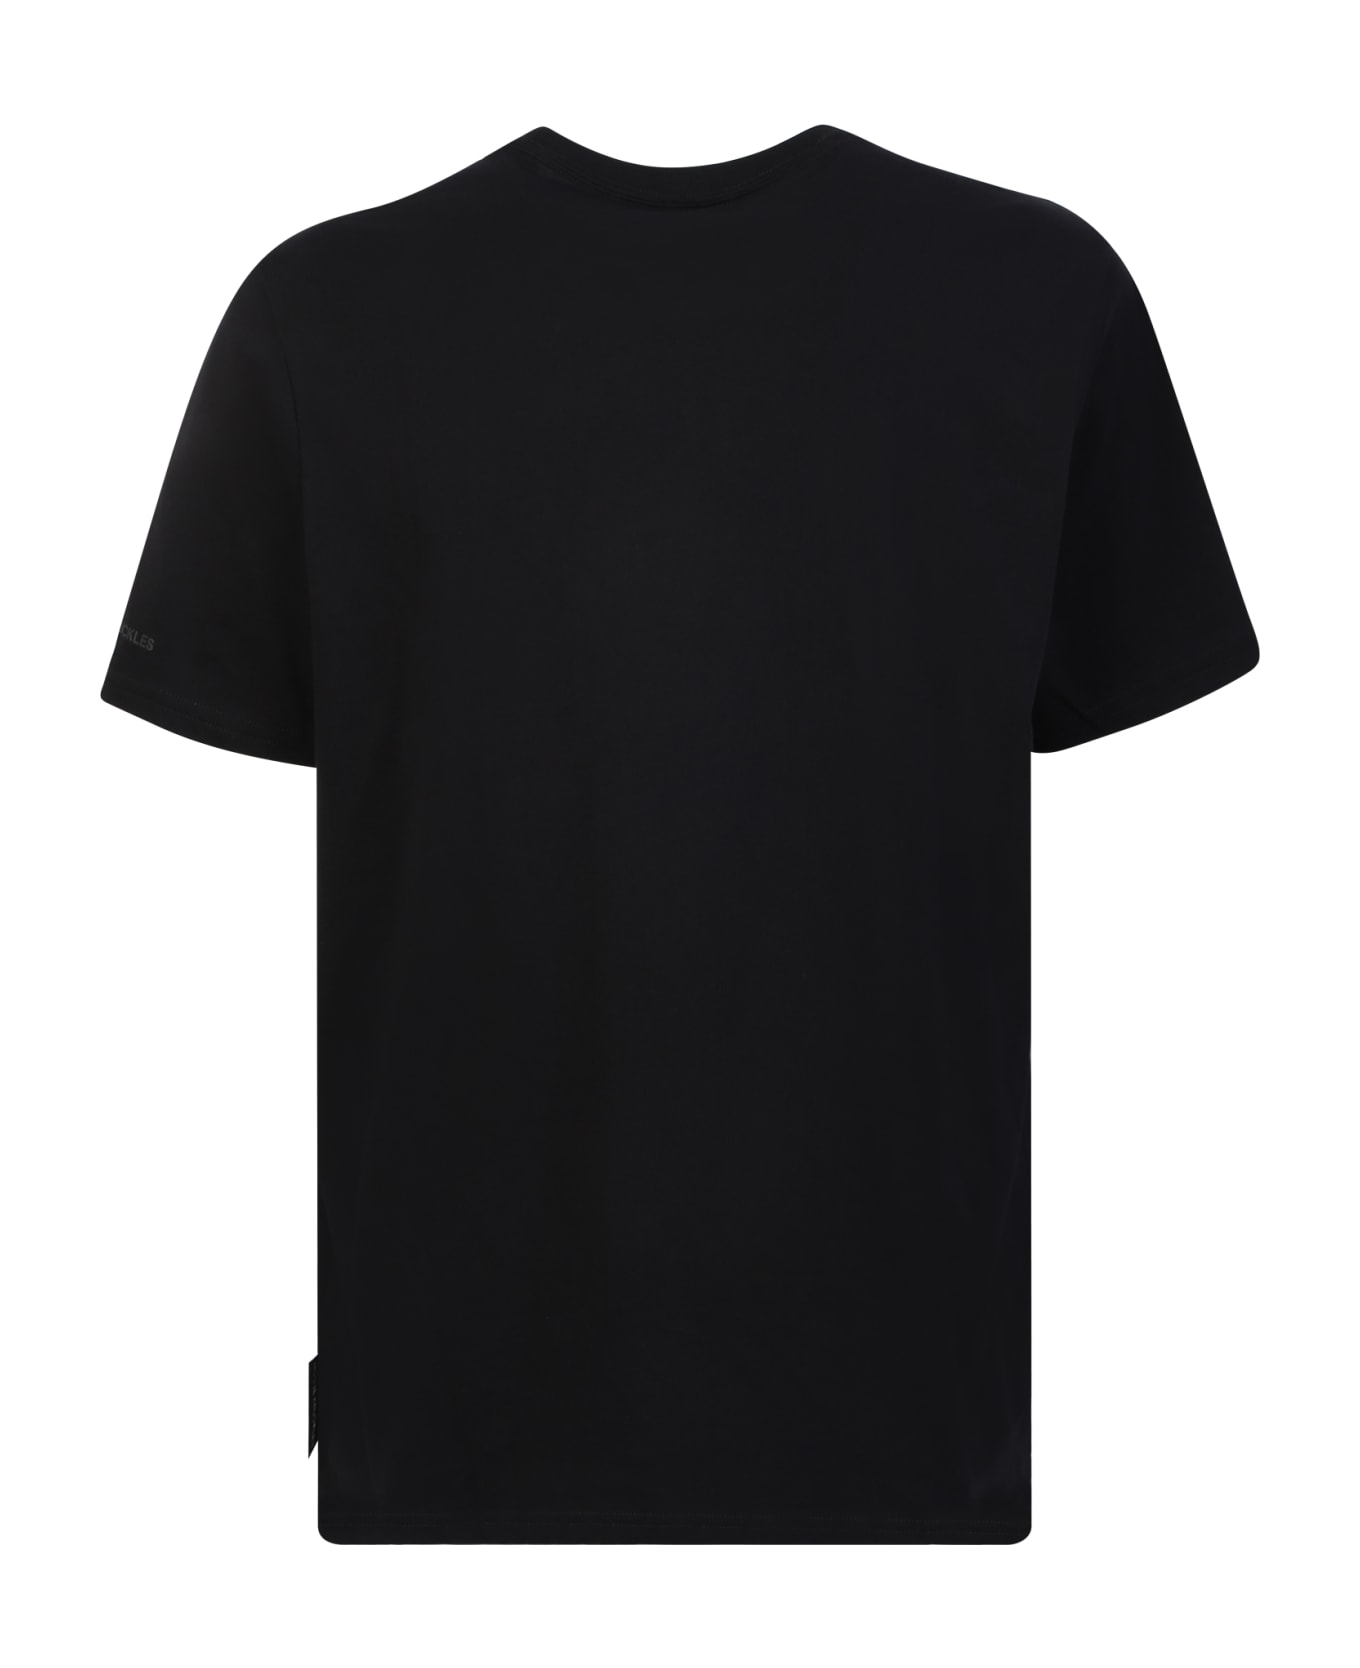 Moose Knuckles Black Satellite T-shirt - Black